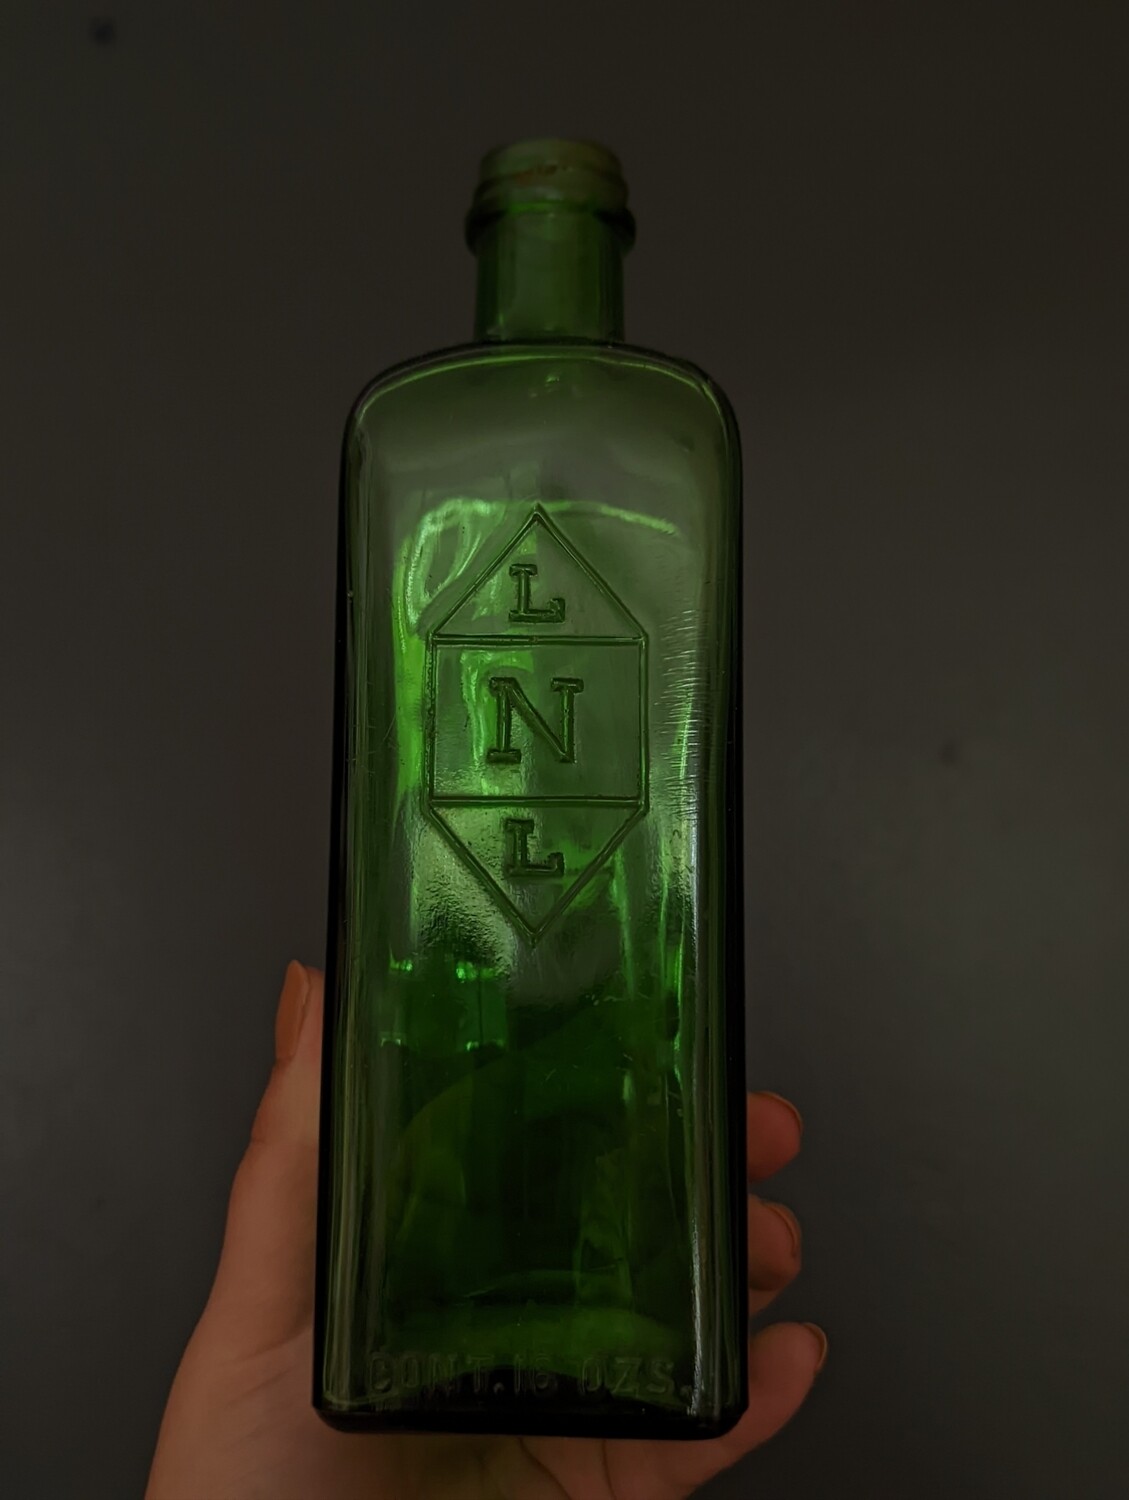 green bottle